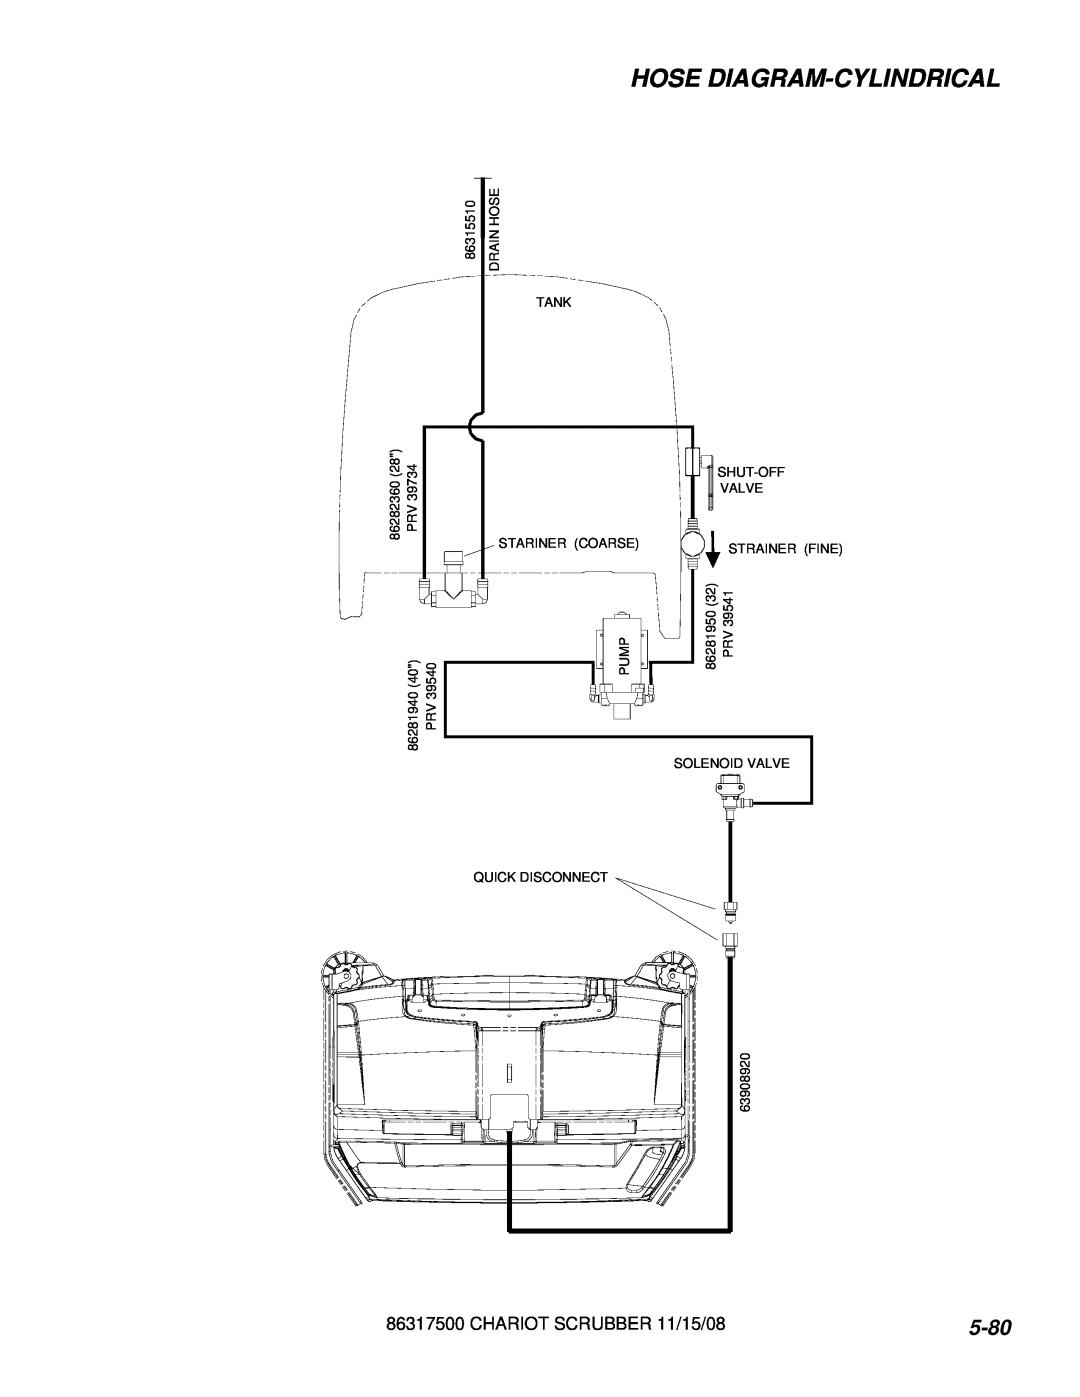 Windsor CSX24 Hose Diagram-Cylindrical, 5-80, 86315510, Drain Hose, Tank, 86282360 28 PRV 86281940 40 PRV, Solenoid Valve 